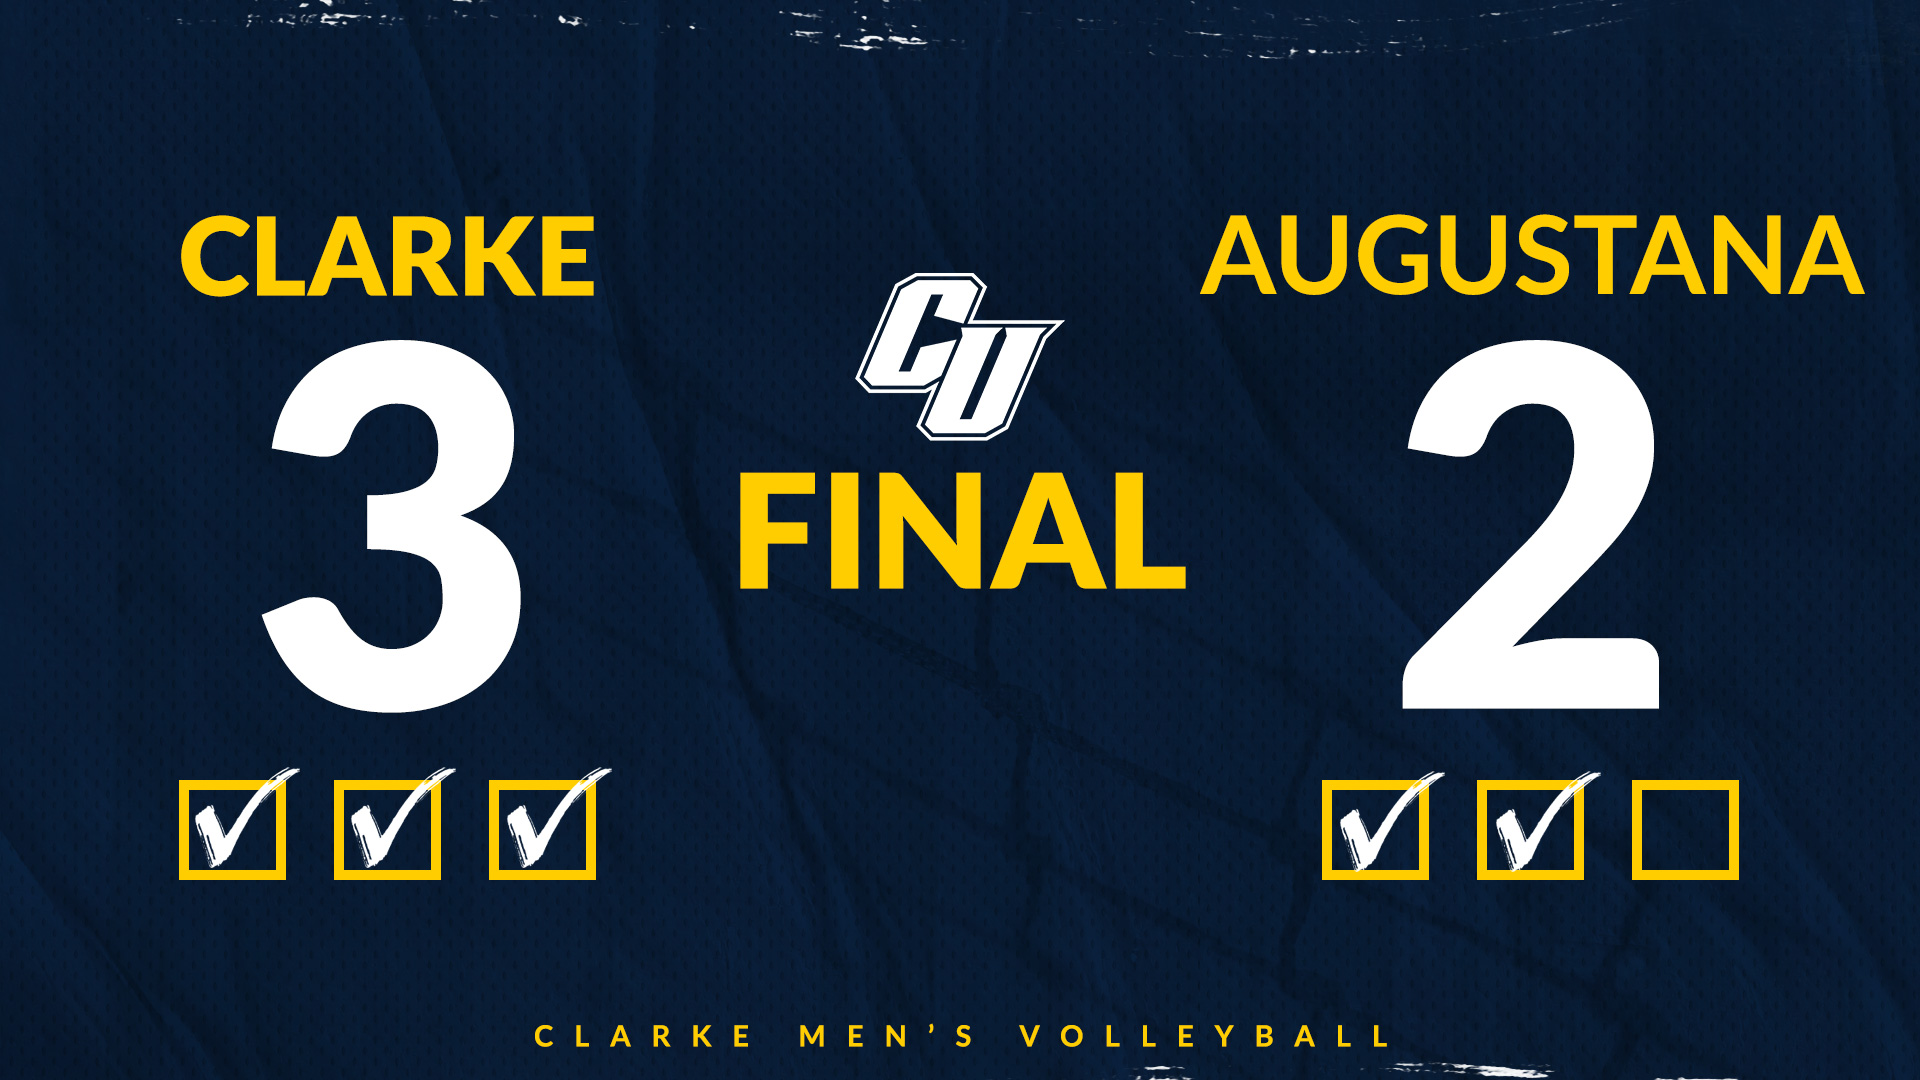 Clarke: 3
Augustana: 2
Final
Clarke Men's Volleyball